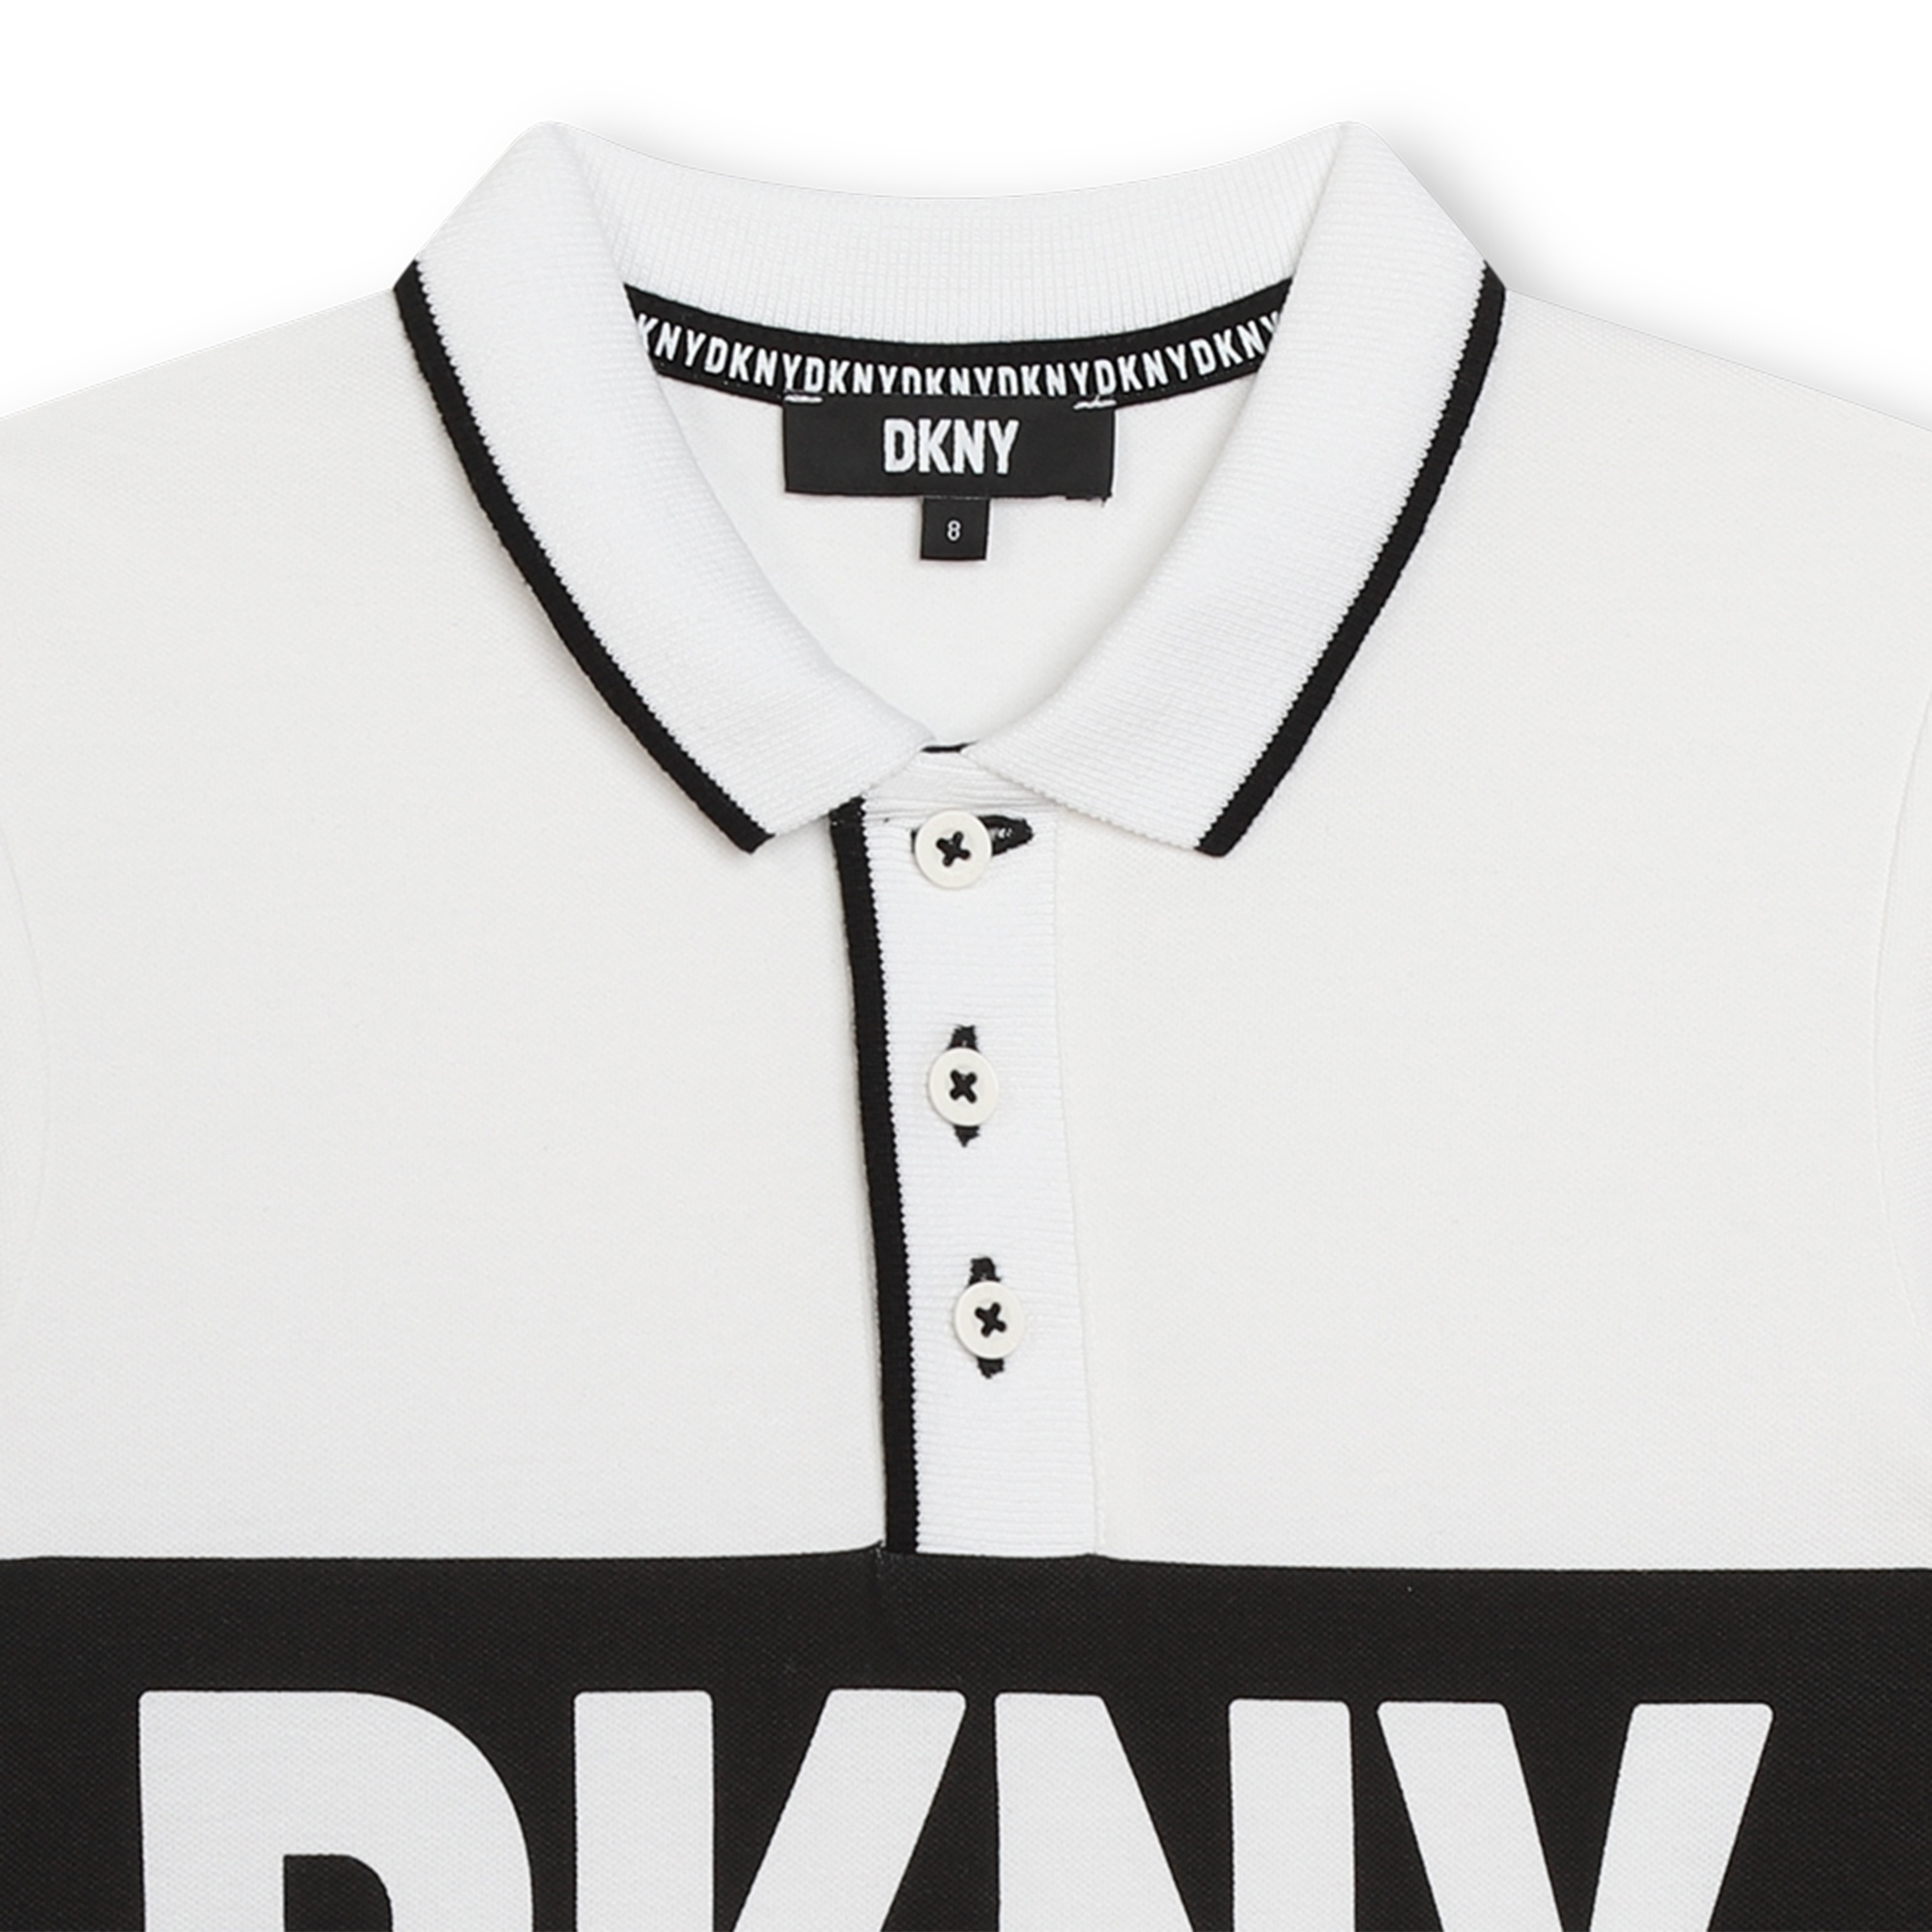 Kurzärmliges Poloshirt DKNY Für JUNGE